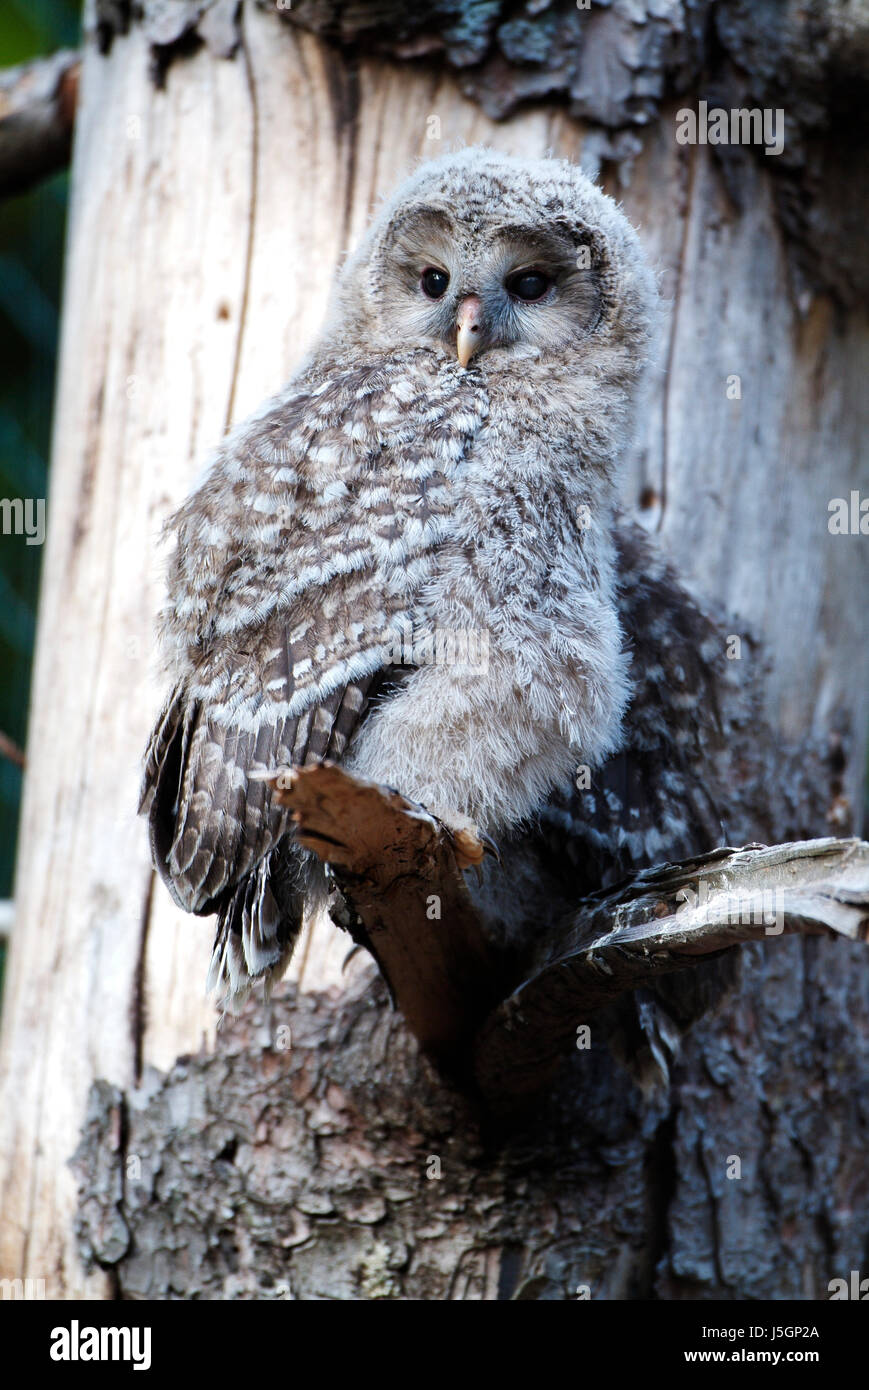 Tree cacciatore di uccelli Uccelli raptor ramo owl cuscini foresta habichtskauz natura Foto Stock